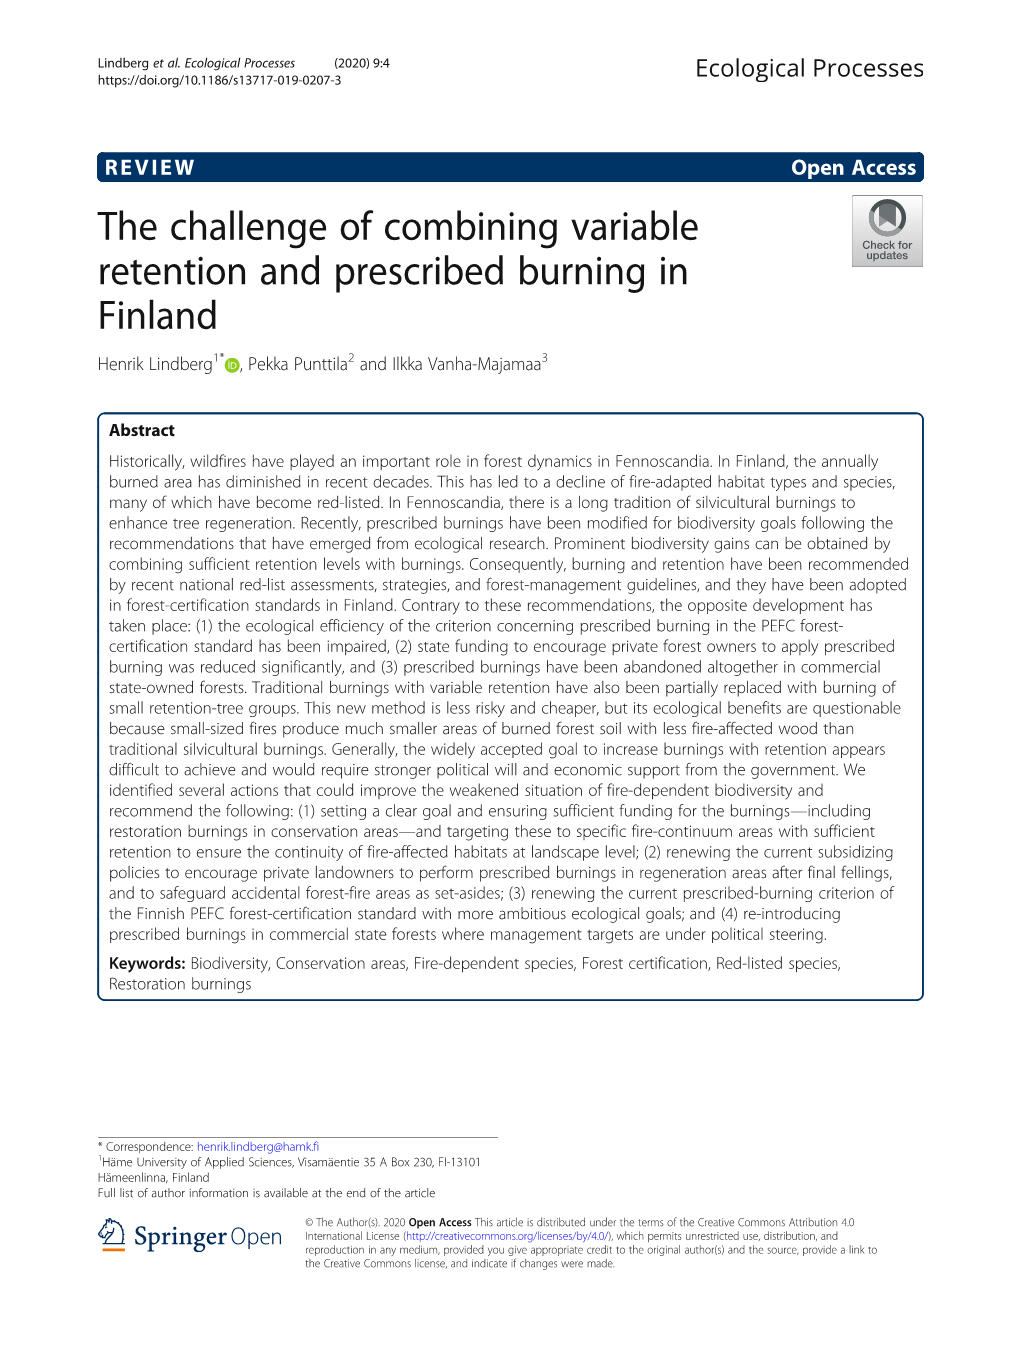 The Challenge of Combining Variable Retention and Prescribed Burning in Finland Henrik Lindberg1* , Pekka Punttila2 and Ilkka Vanha-Majamaa3